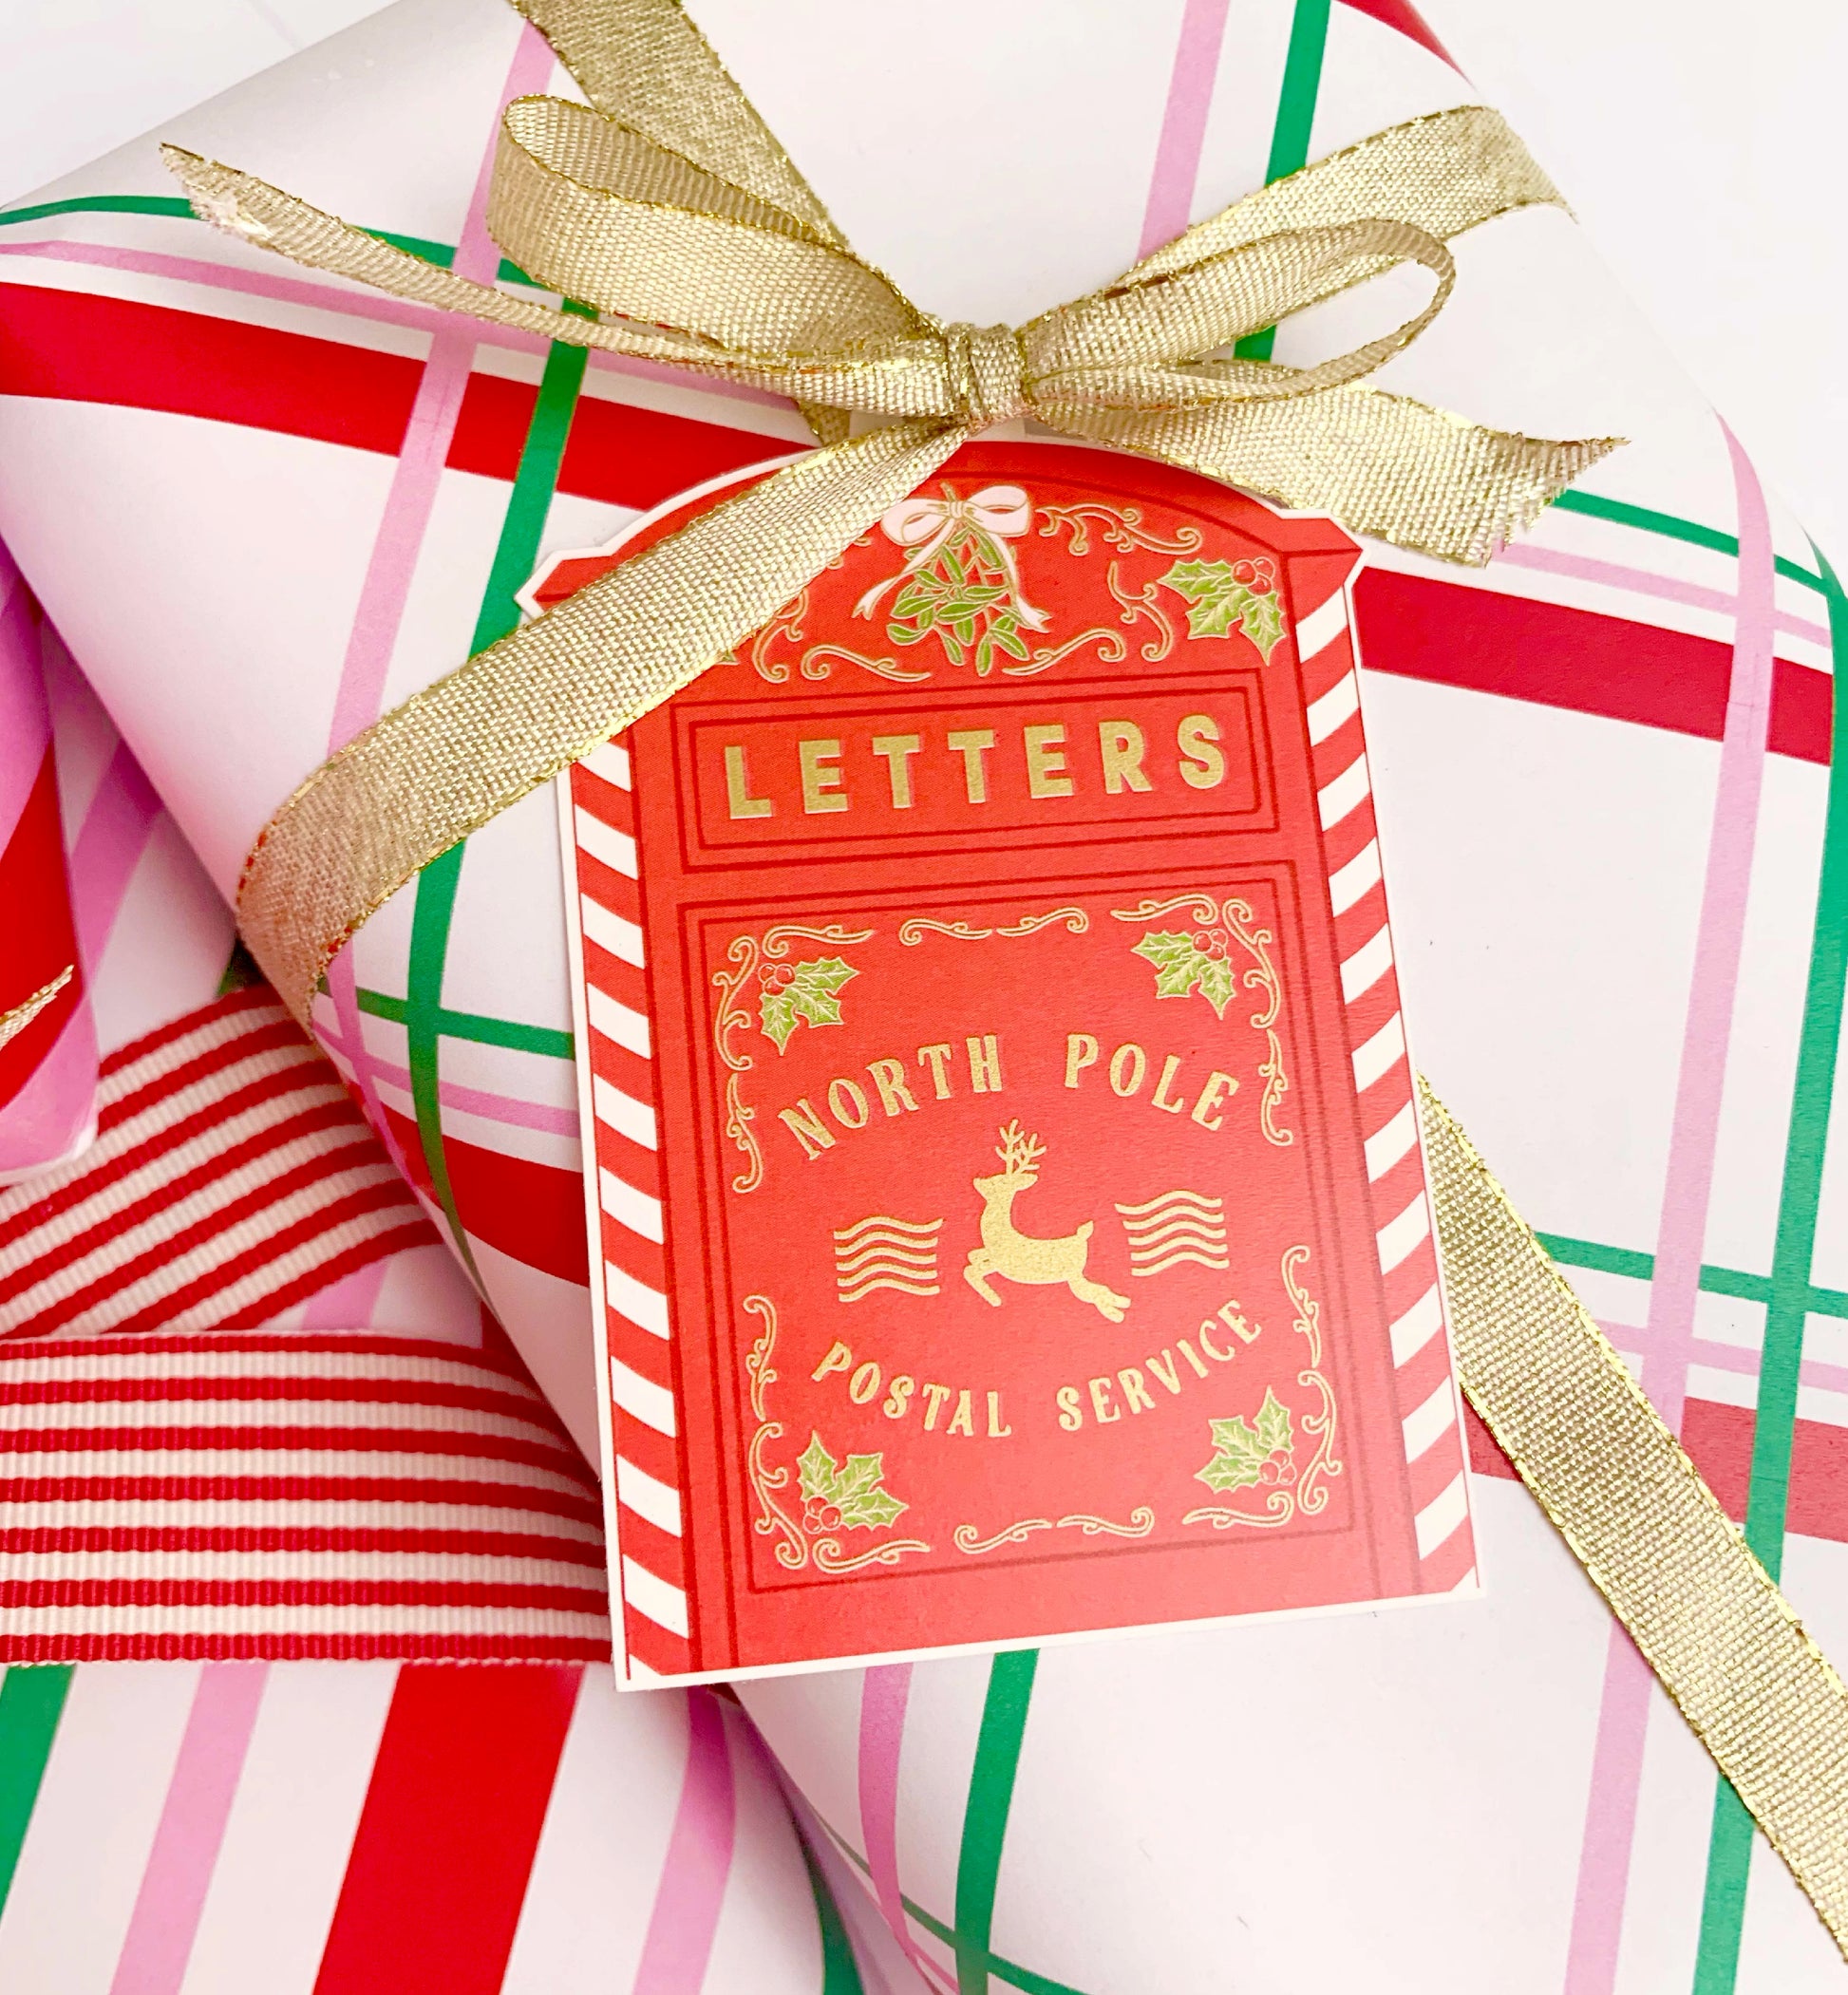 Printable Gold Chevron Christmas Gift Tags, Christmas Labels, Red